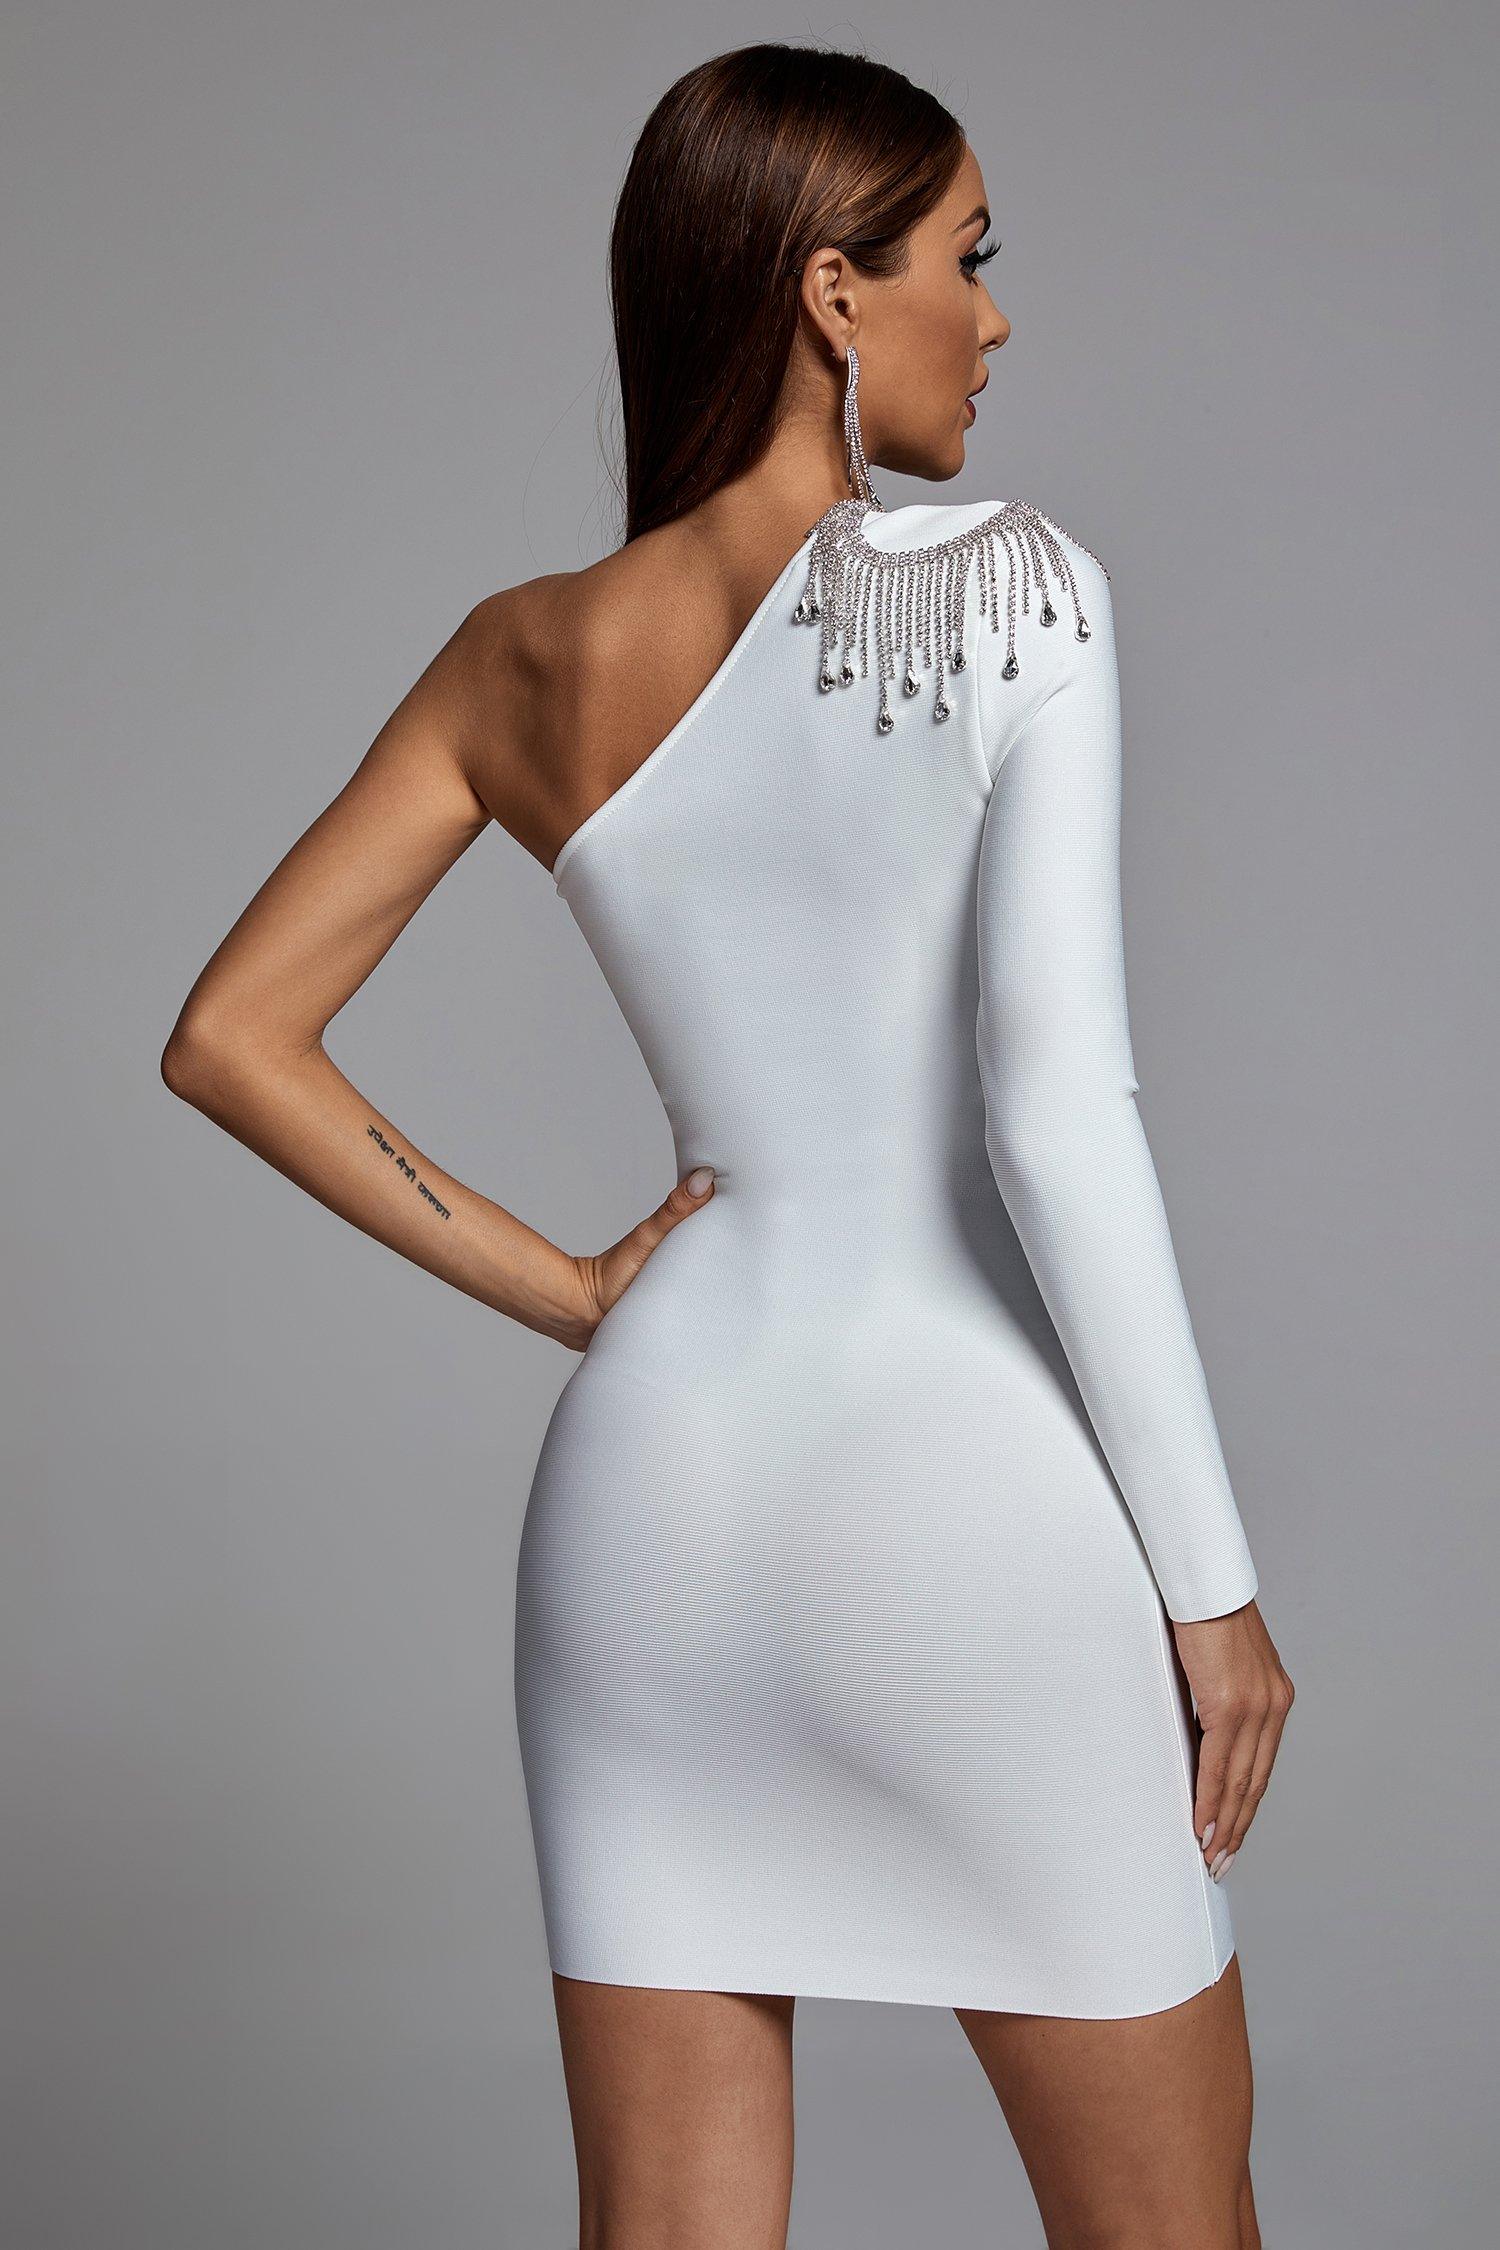 Vanera One Shoulder Rhinestone Bandage Dress - White - Bellabarnett